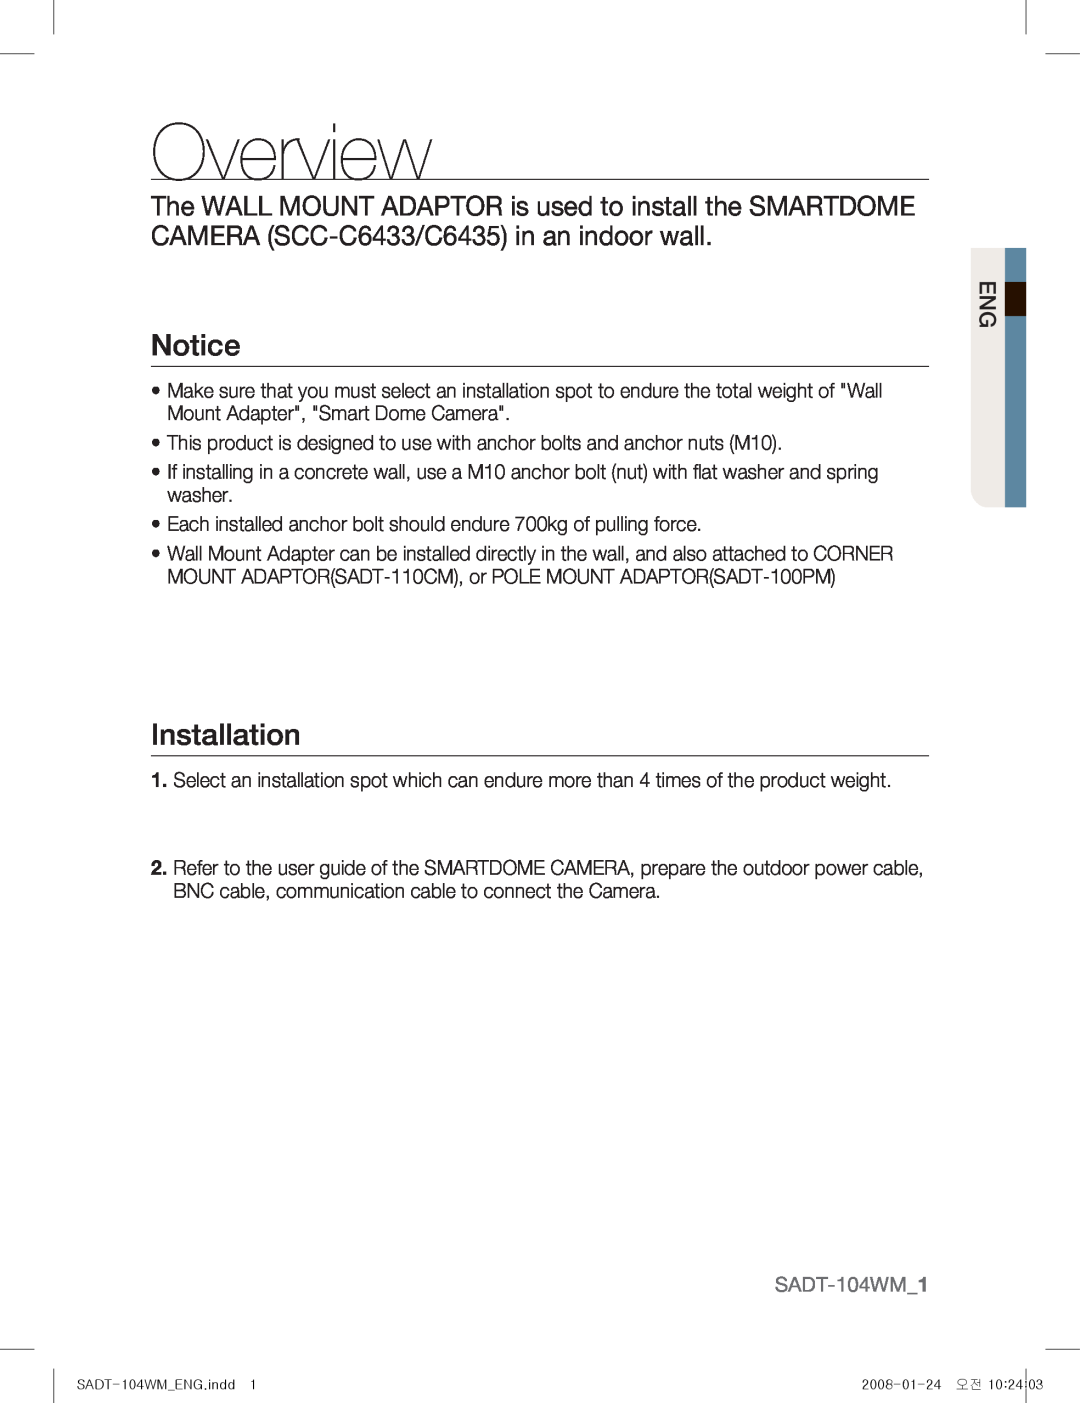 Samsung manual Installation, SADT-104WM, Overview 